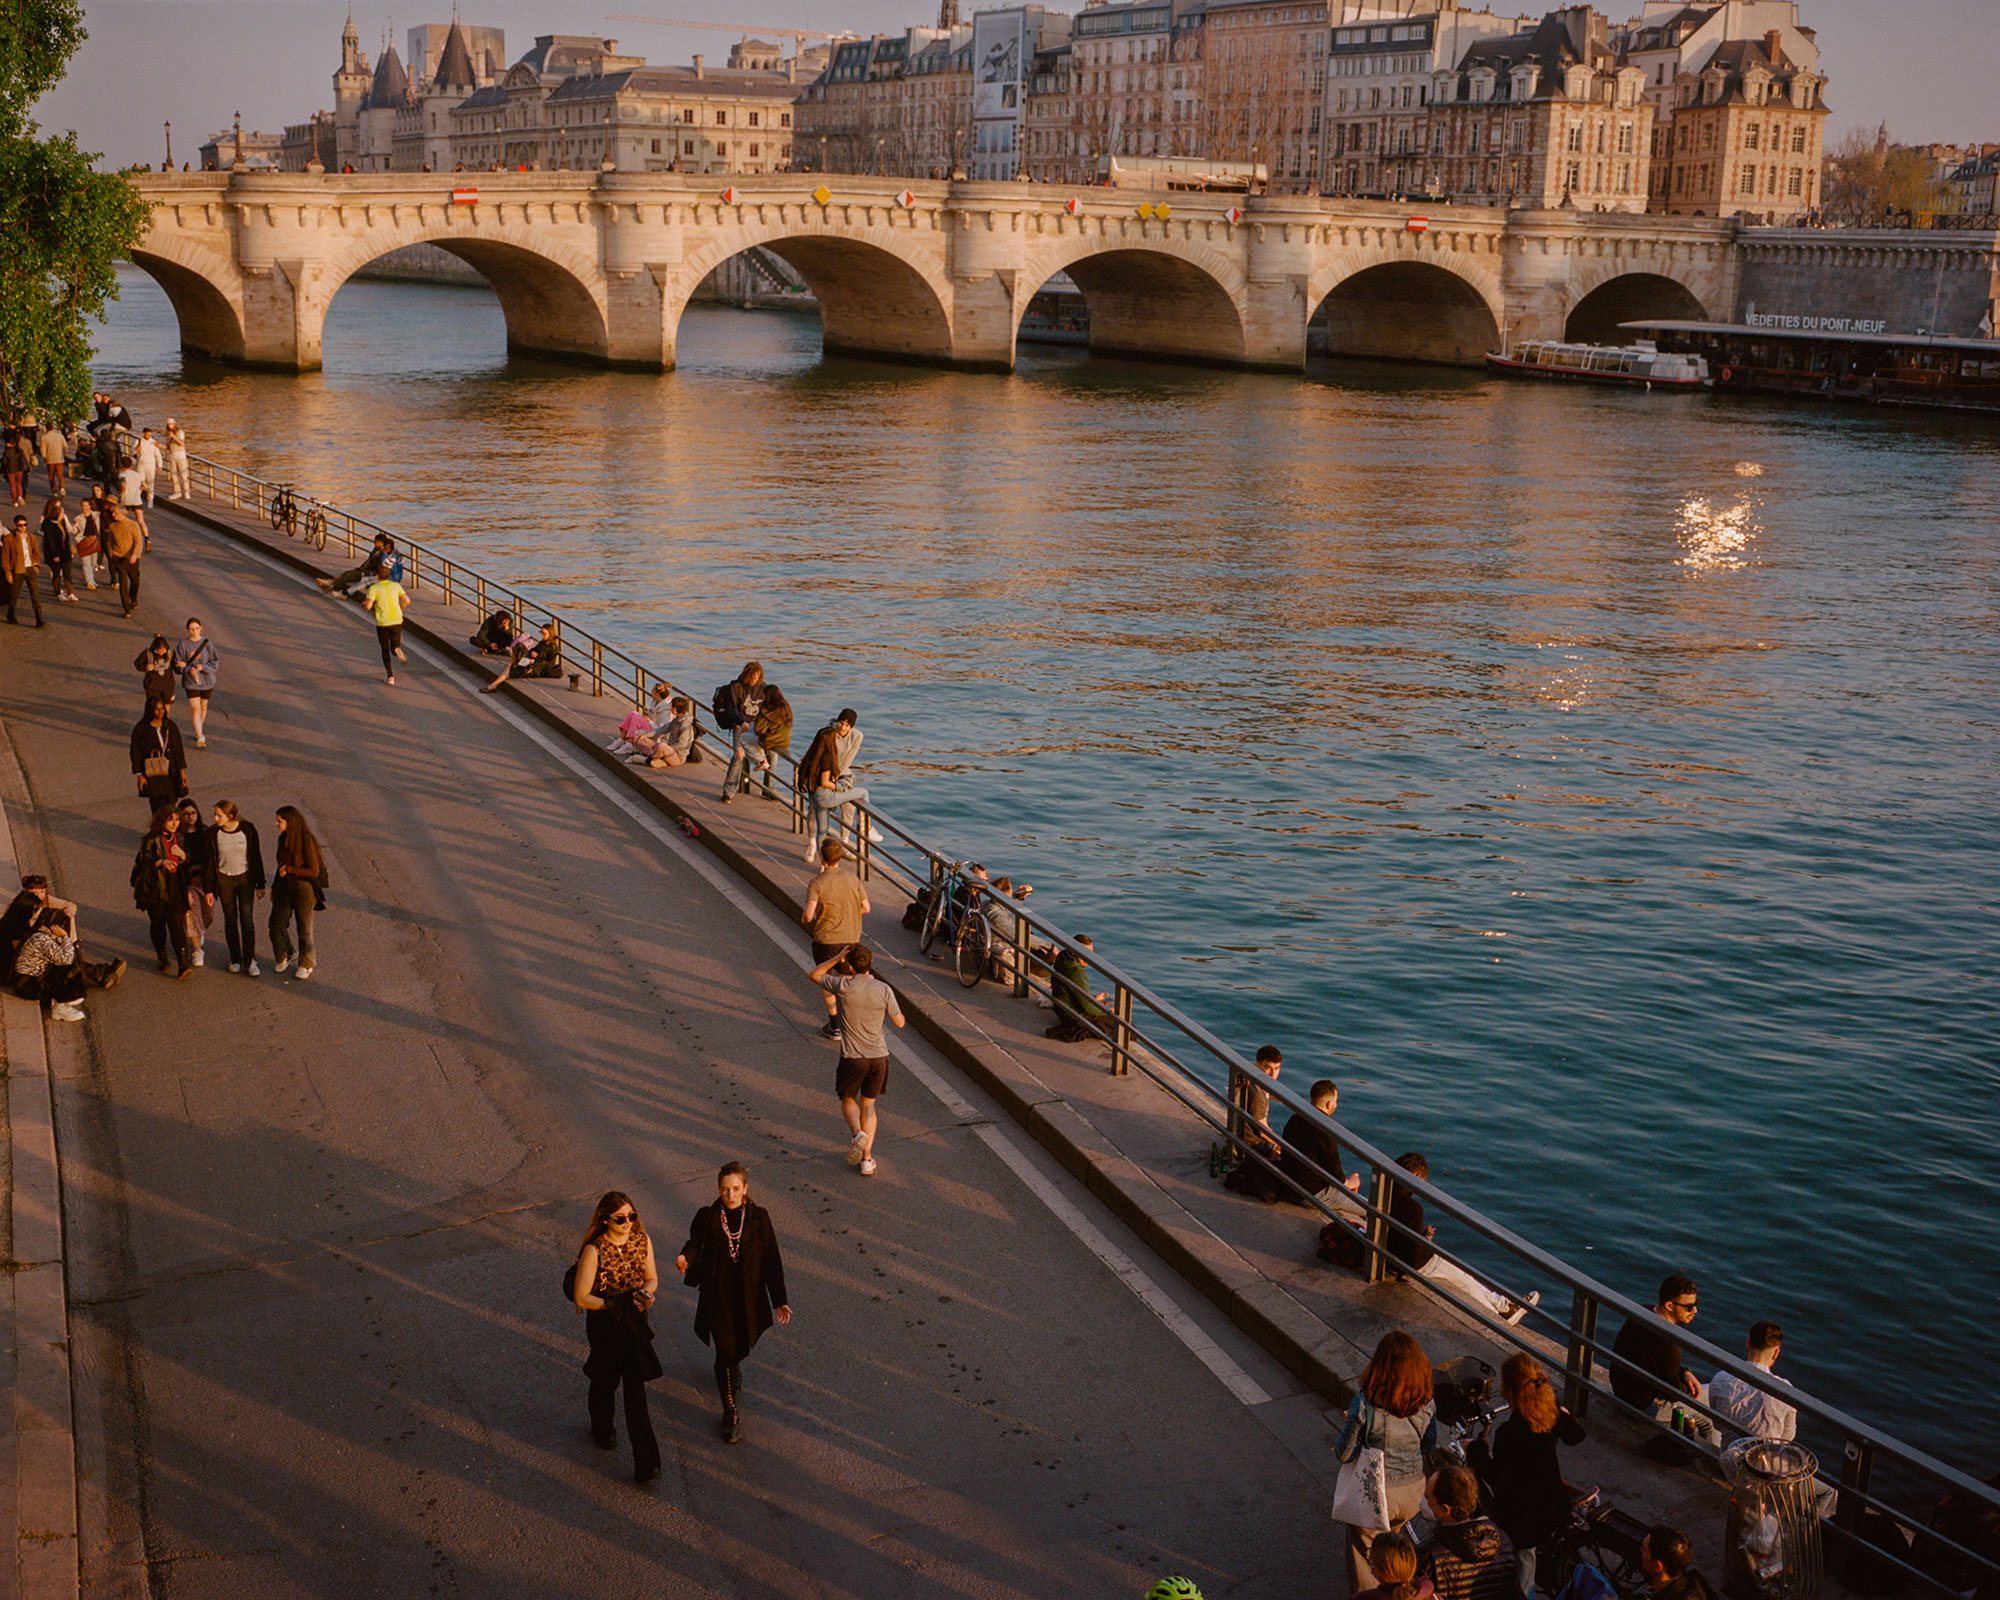 Cleaning the Seine was a cornerstone of Paris’ winning bid for the 2024 Olympics. (Sasha Arutyunova)